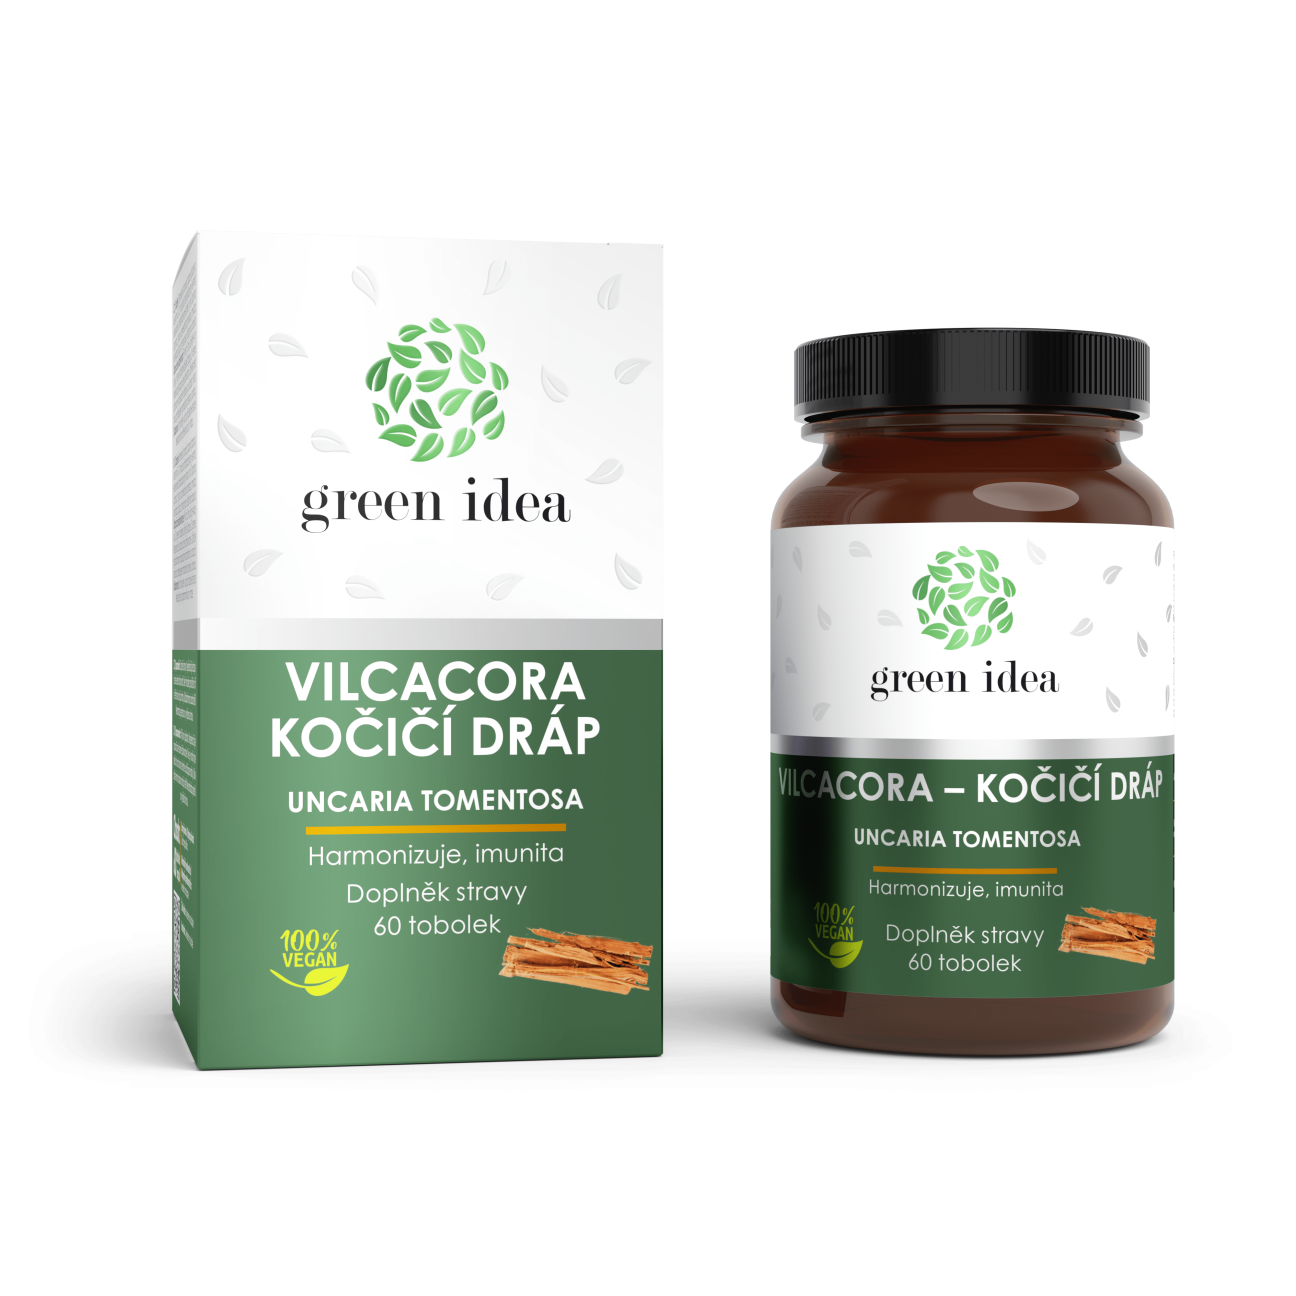 Vilcacora herbal extract